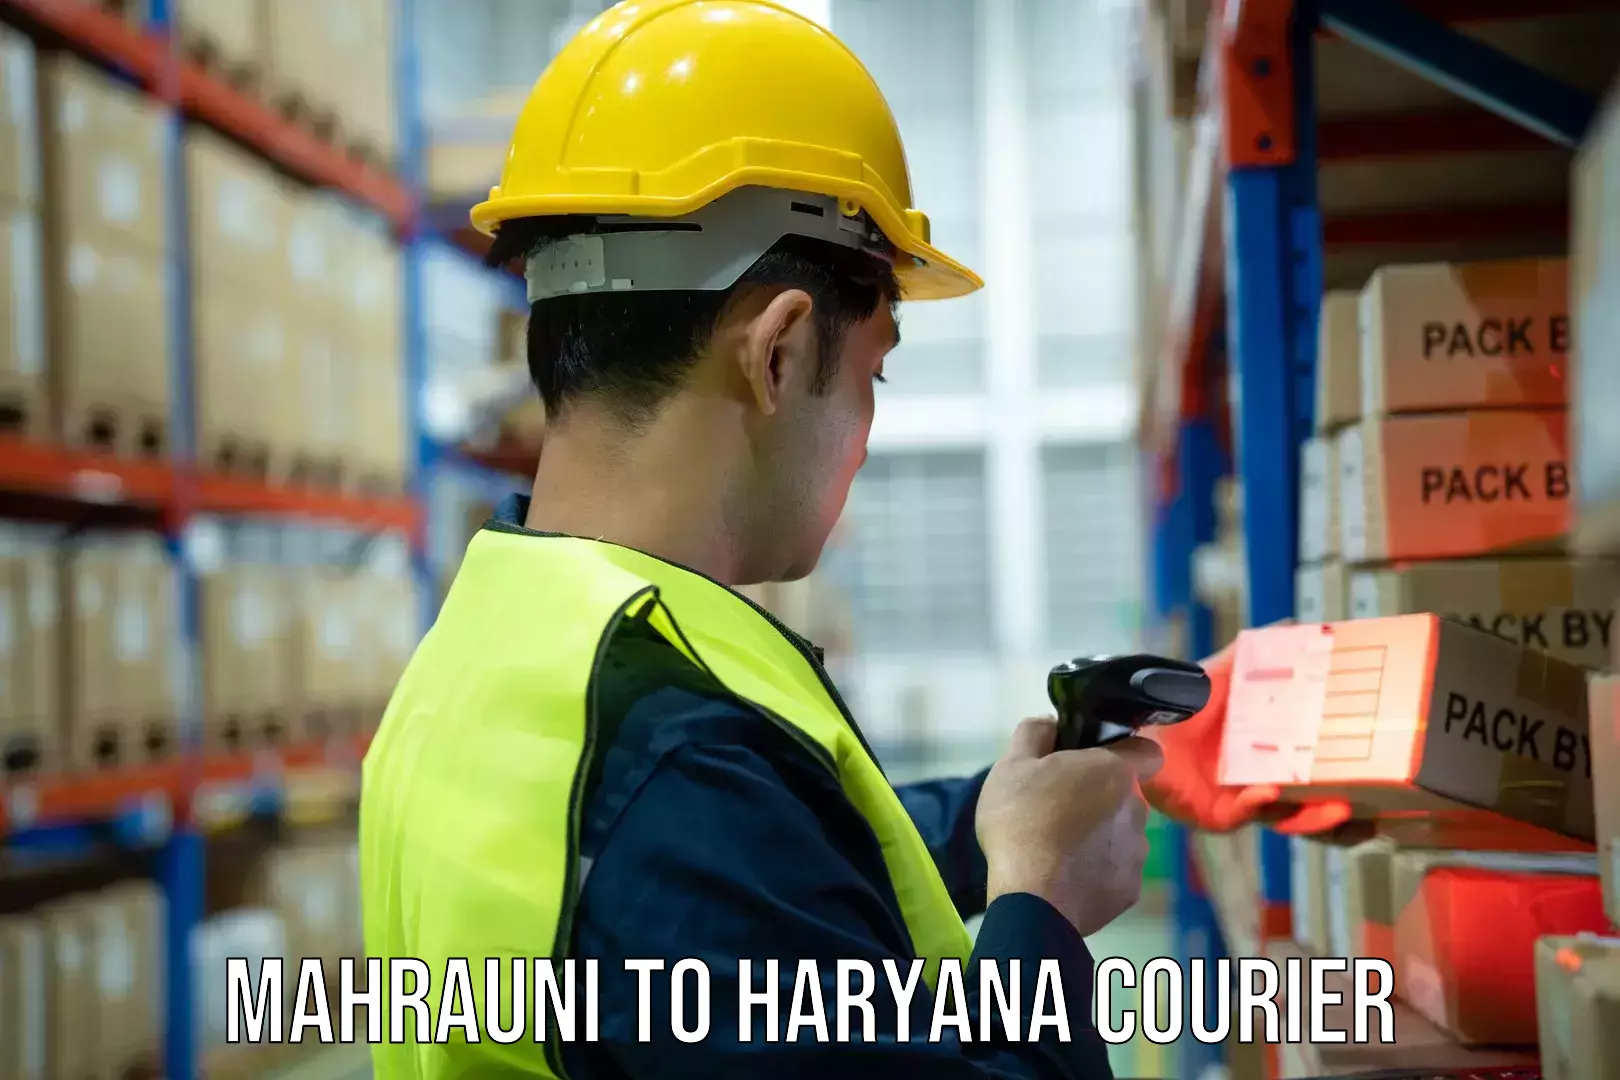 Courier service partnerships Mahrauni to Haryana